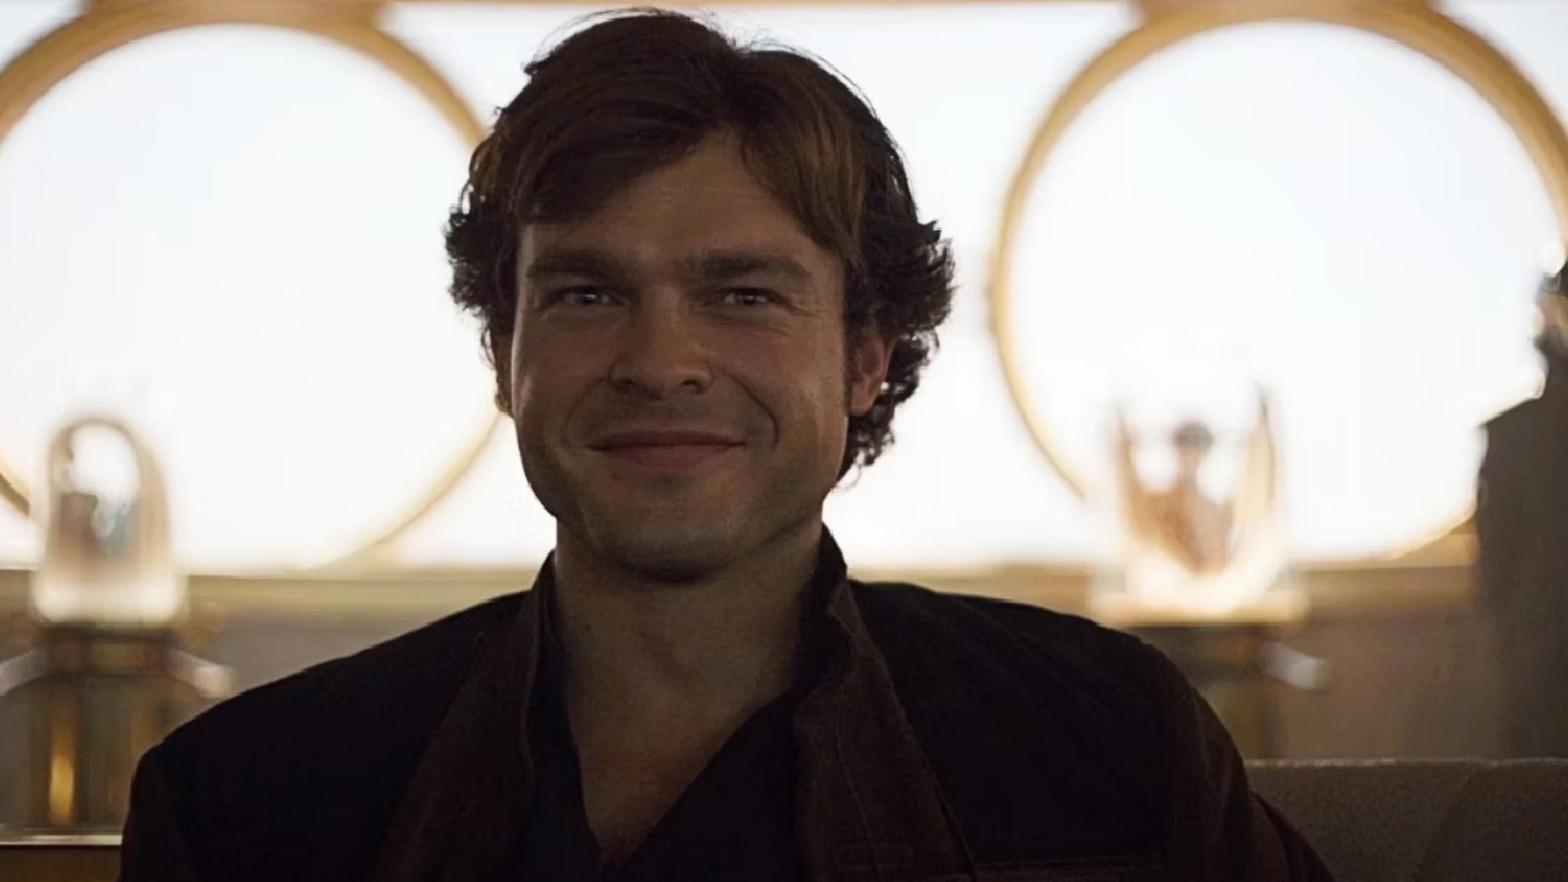 Alden Ehrenreich as Han Solo. (Image: Lucasfilm)